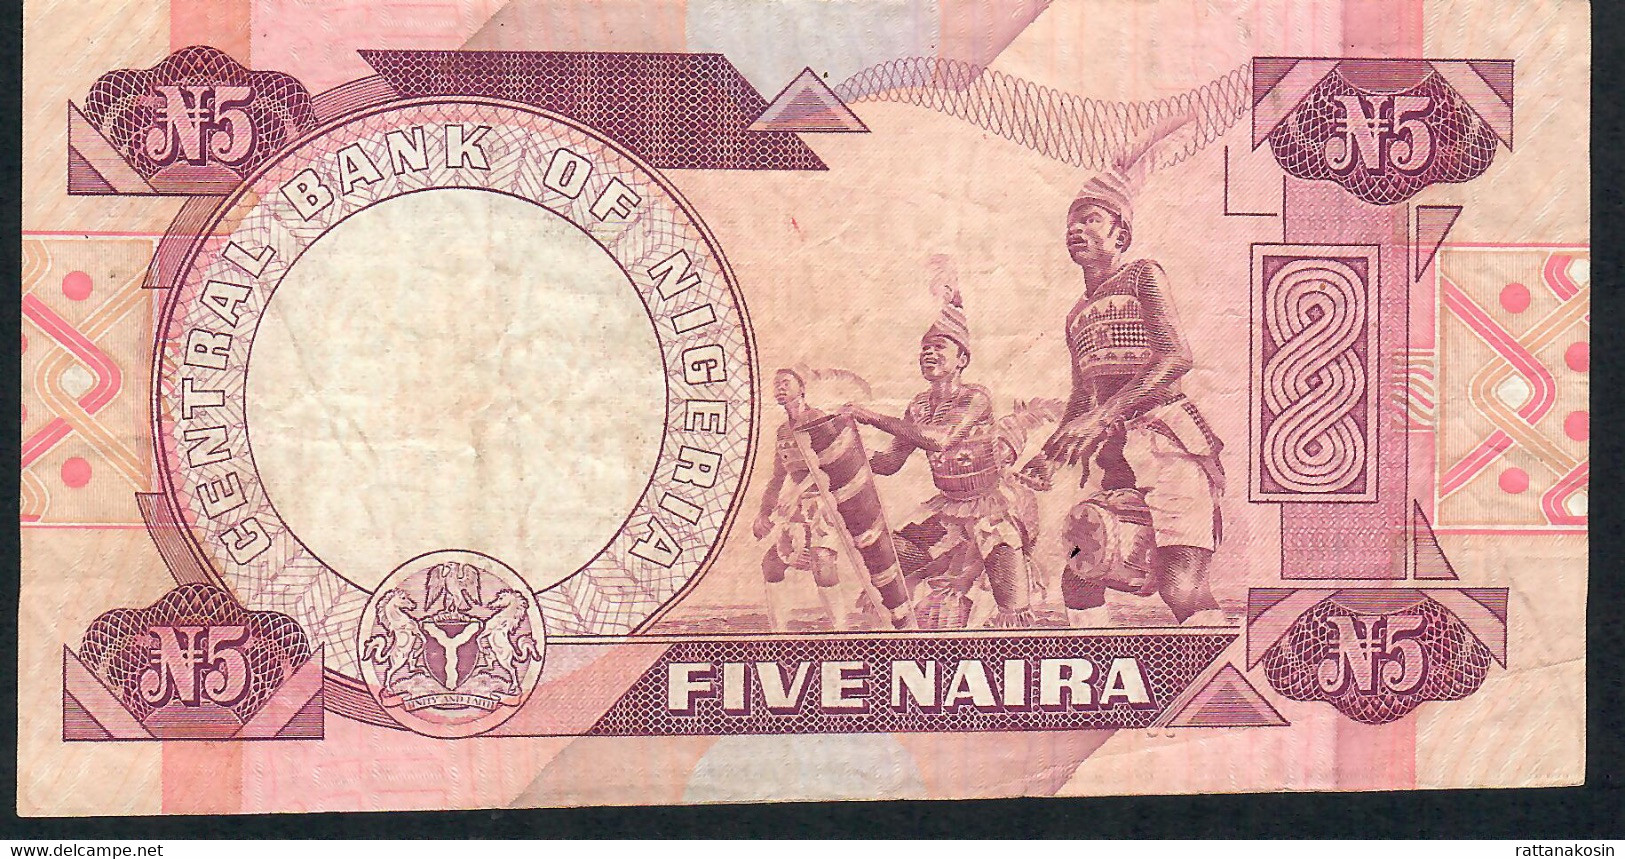 NIGERIA P24a 5 NAIRA 1984 Signature 6 VF NO P.h. - Nigeria